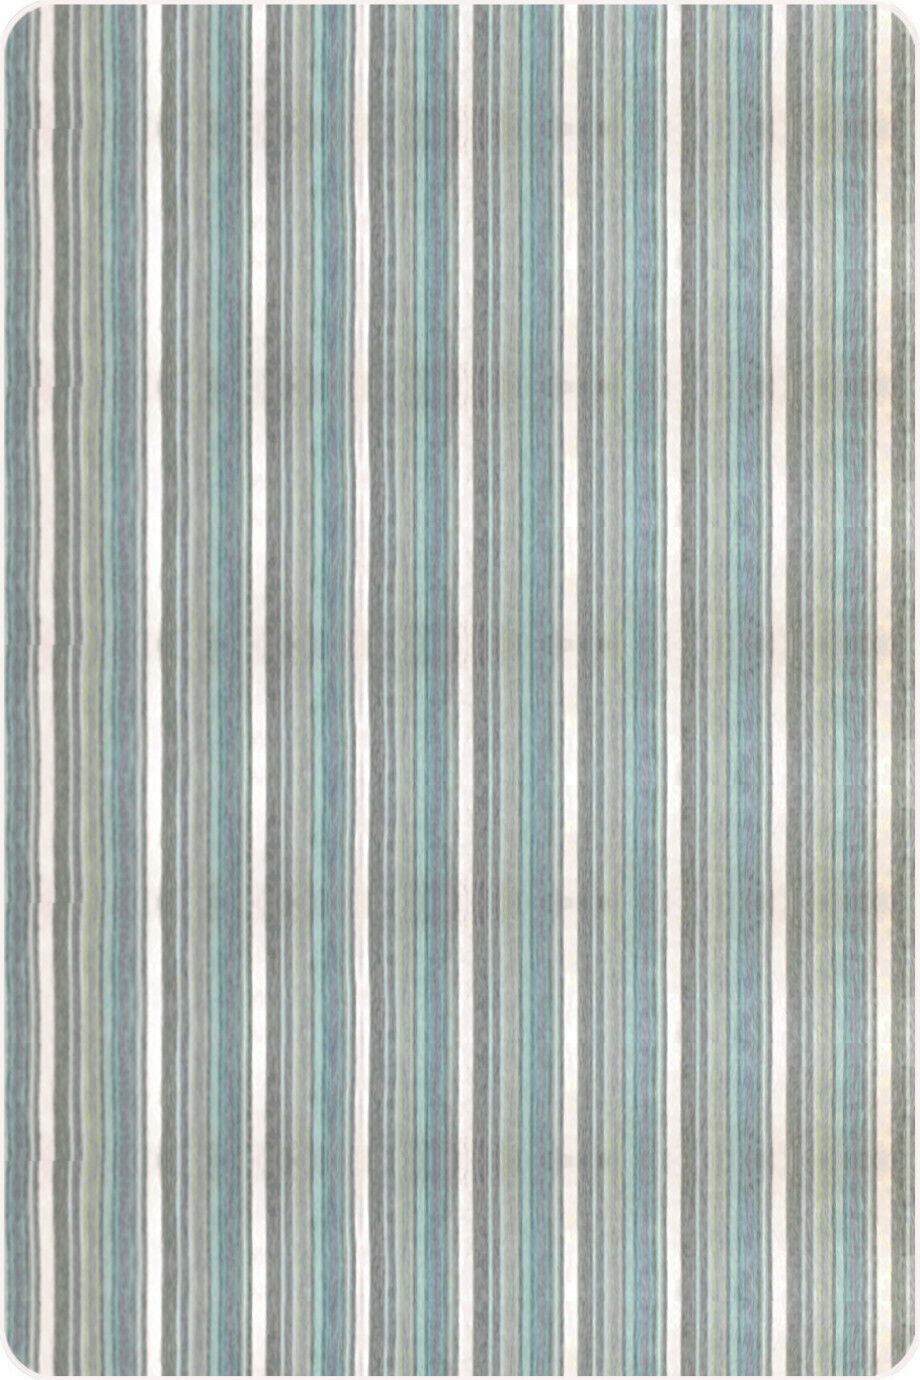 Urauco - Baby Alpaca Wool Throw Blanket / Sofa Cover - Queen 95" x 67" - White/Green/Gray